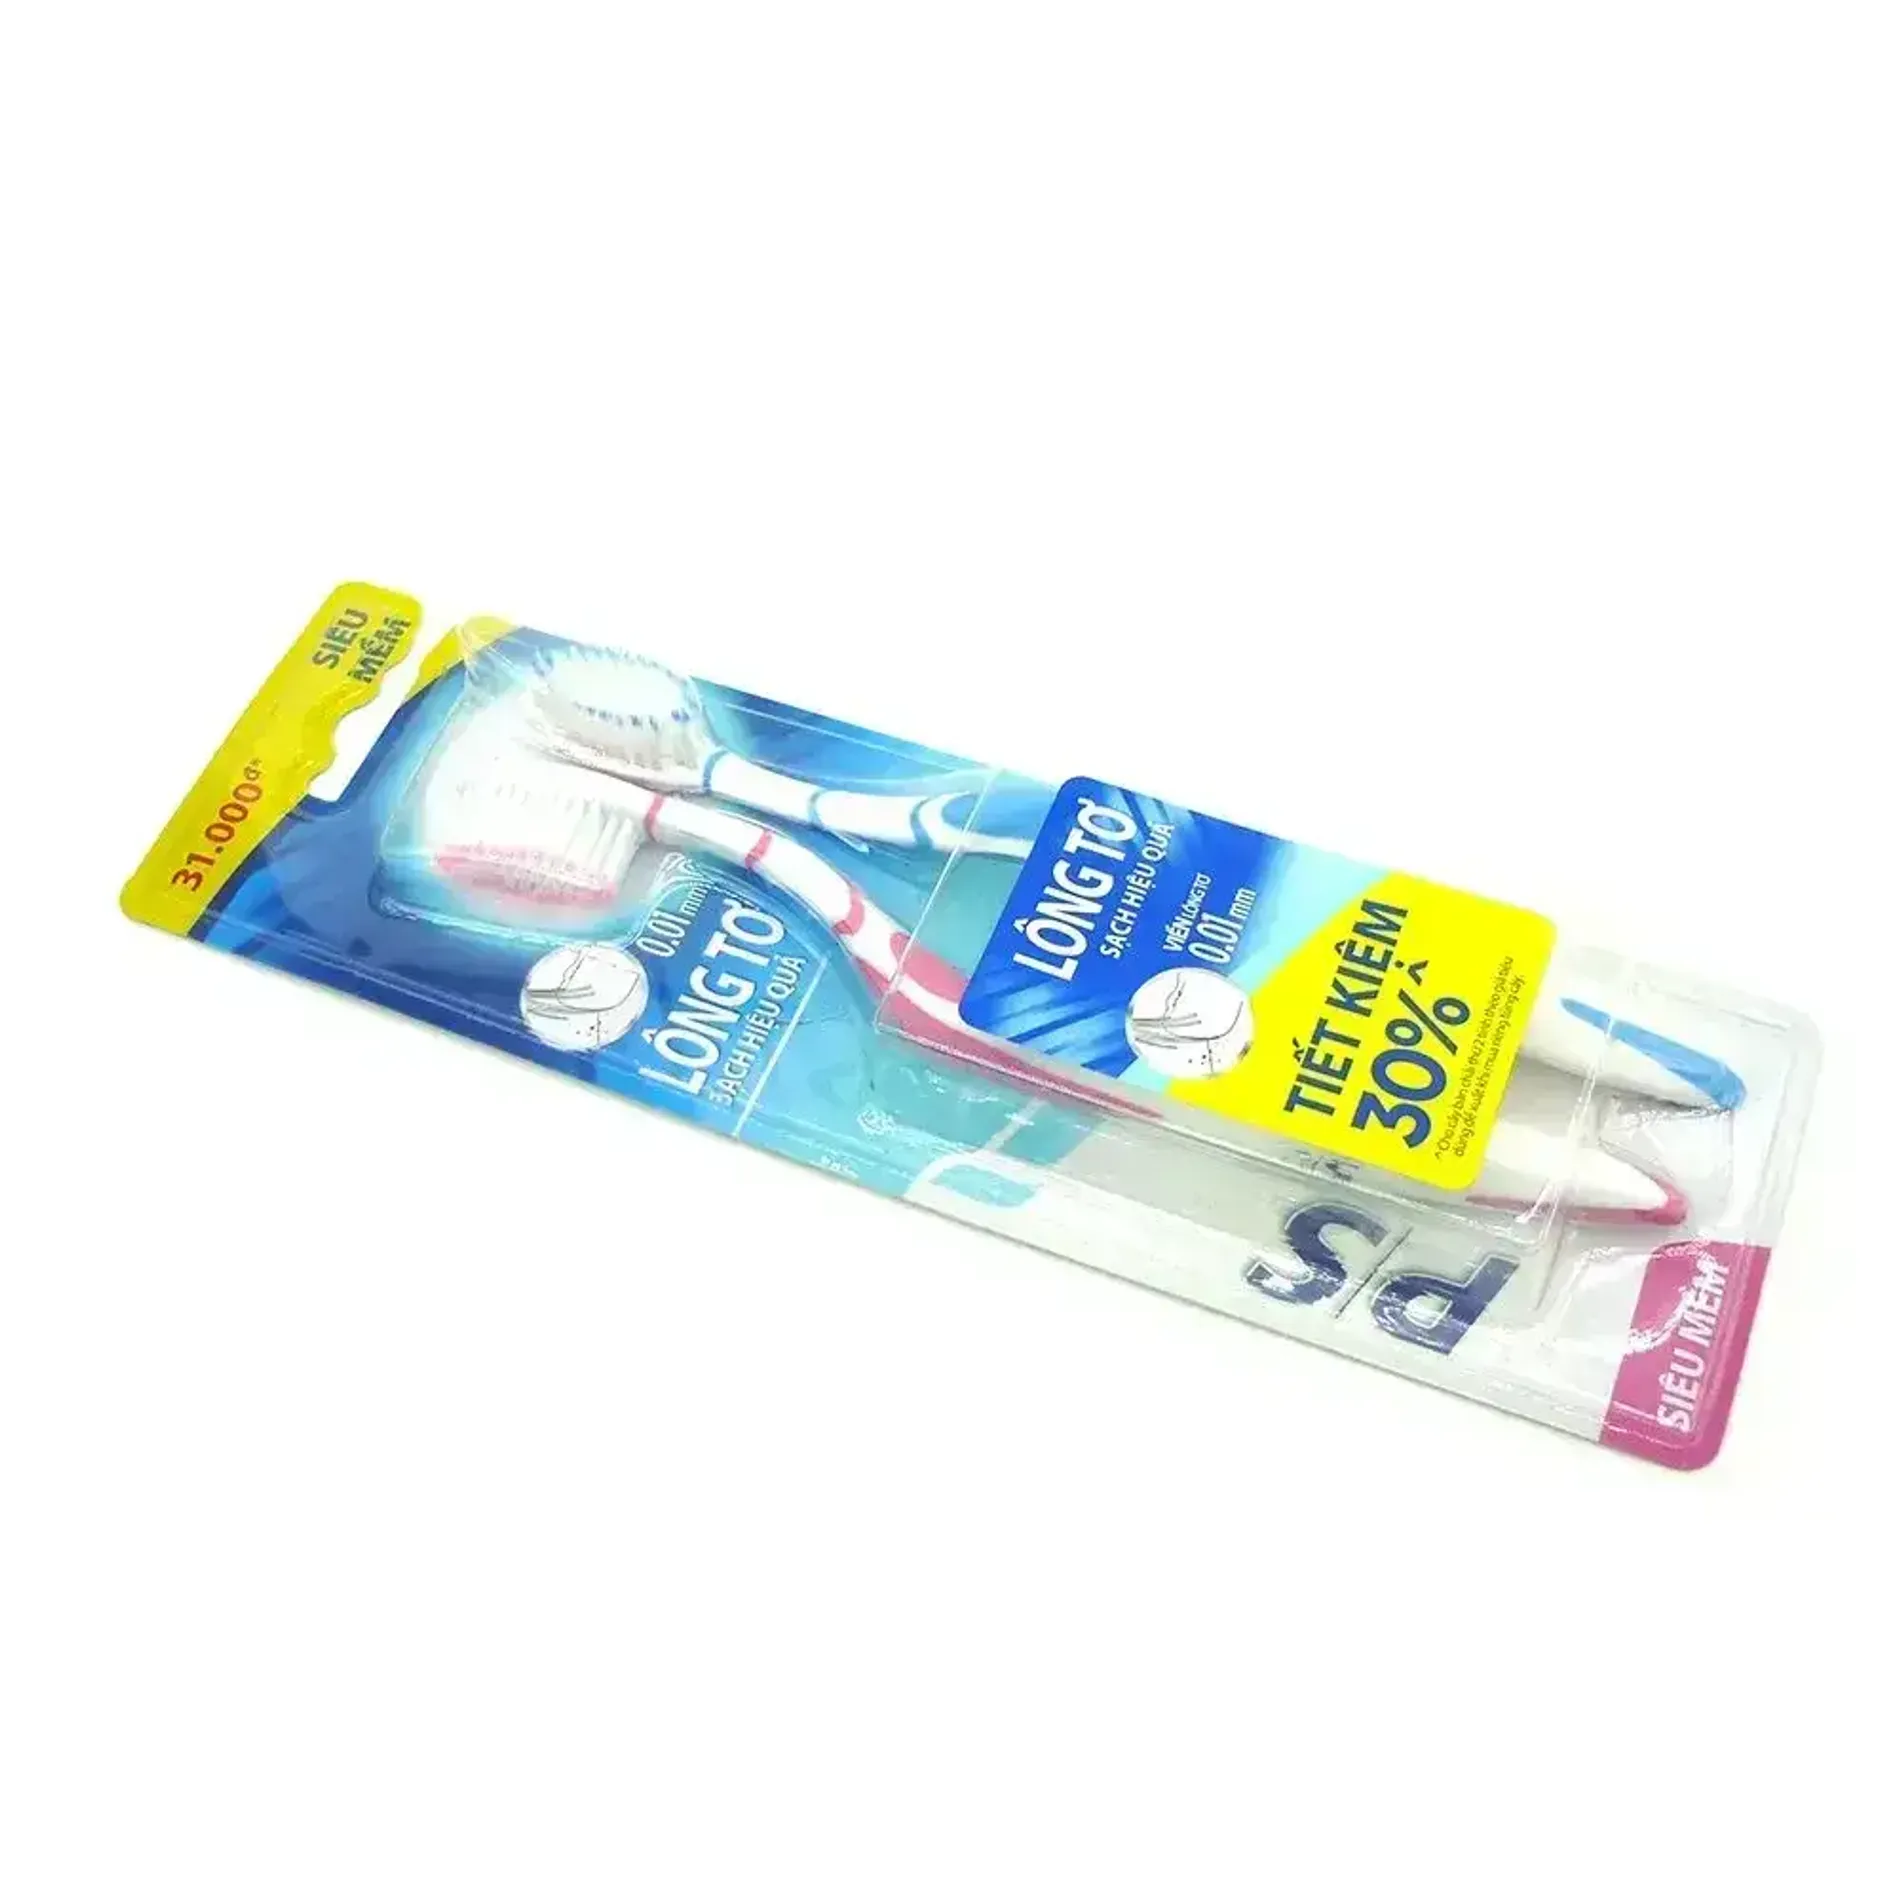 ban-chai-danh-rang-long-to-lam-sach-hieu-qua-p-s-toothbrush-double-care-clean-2